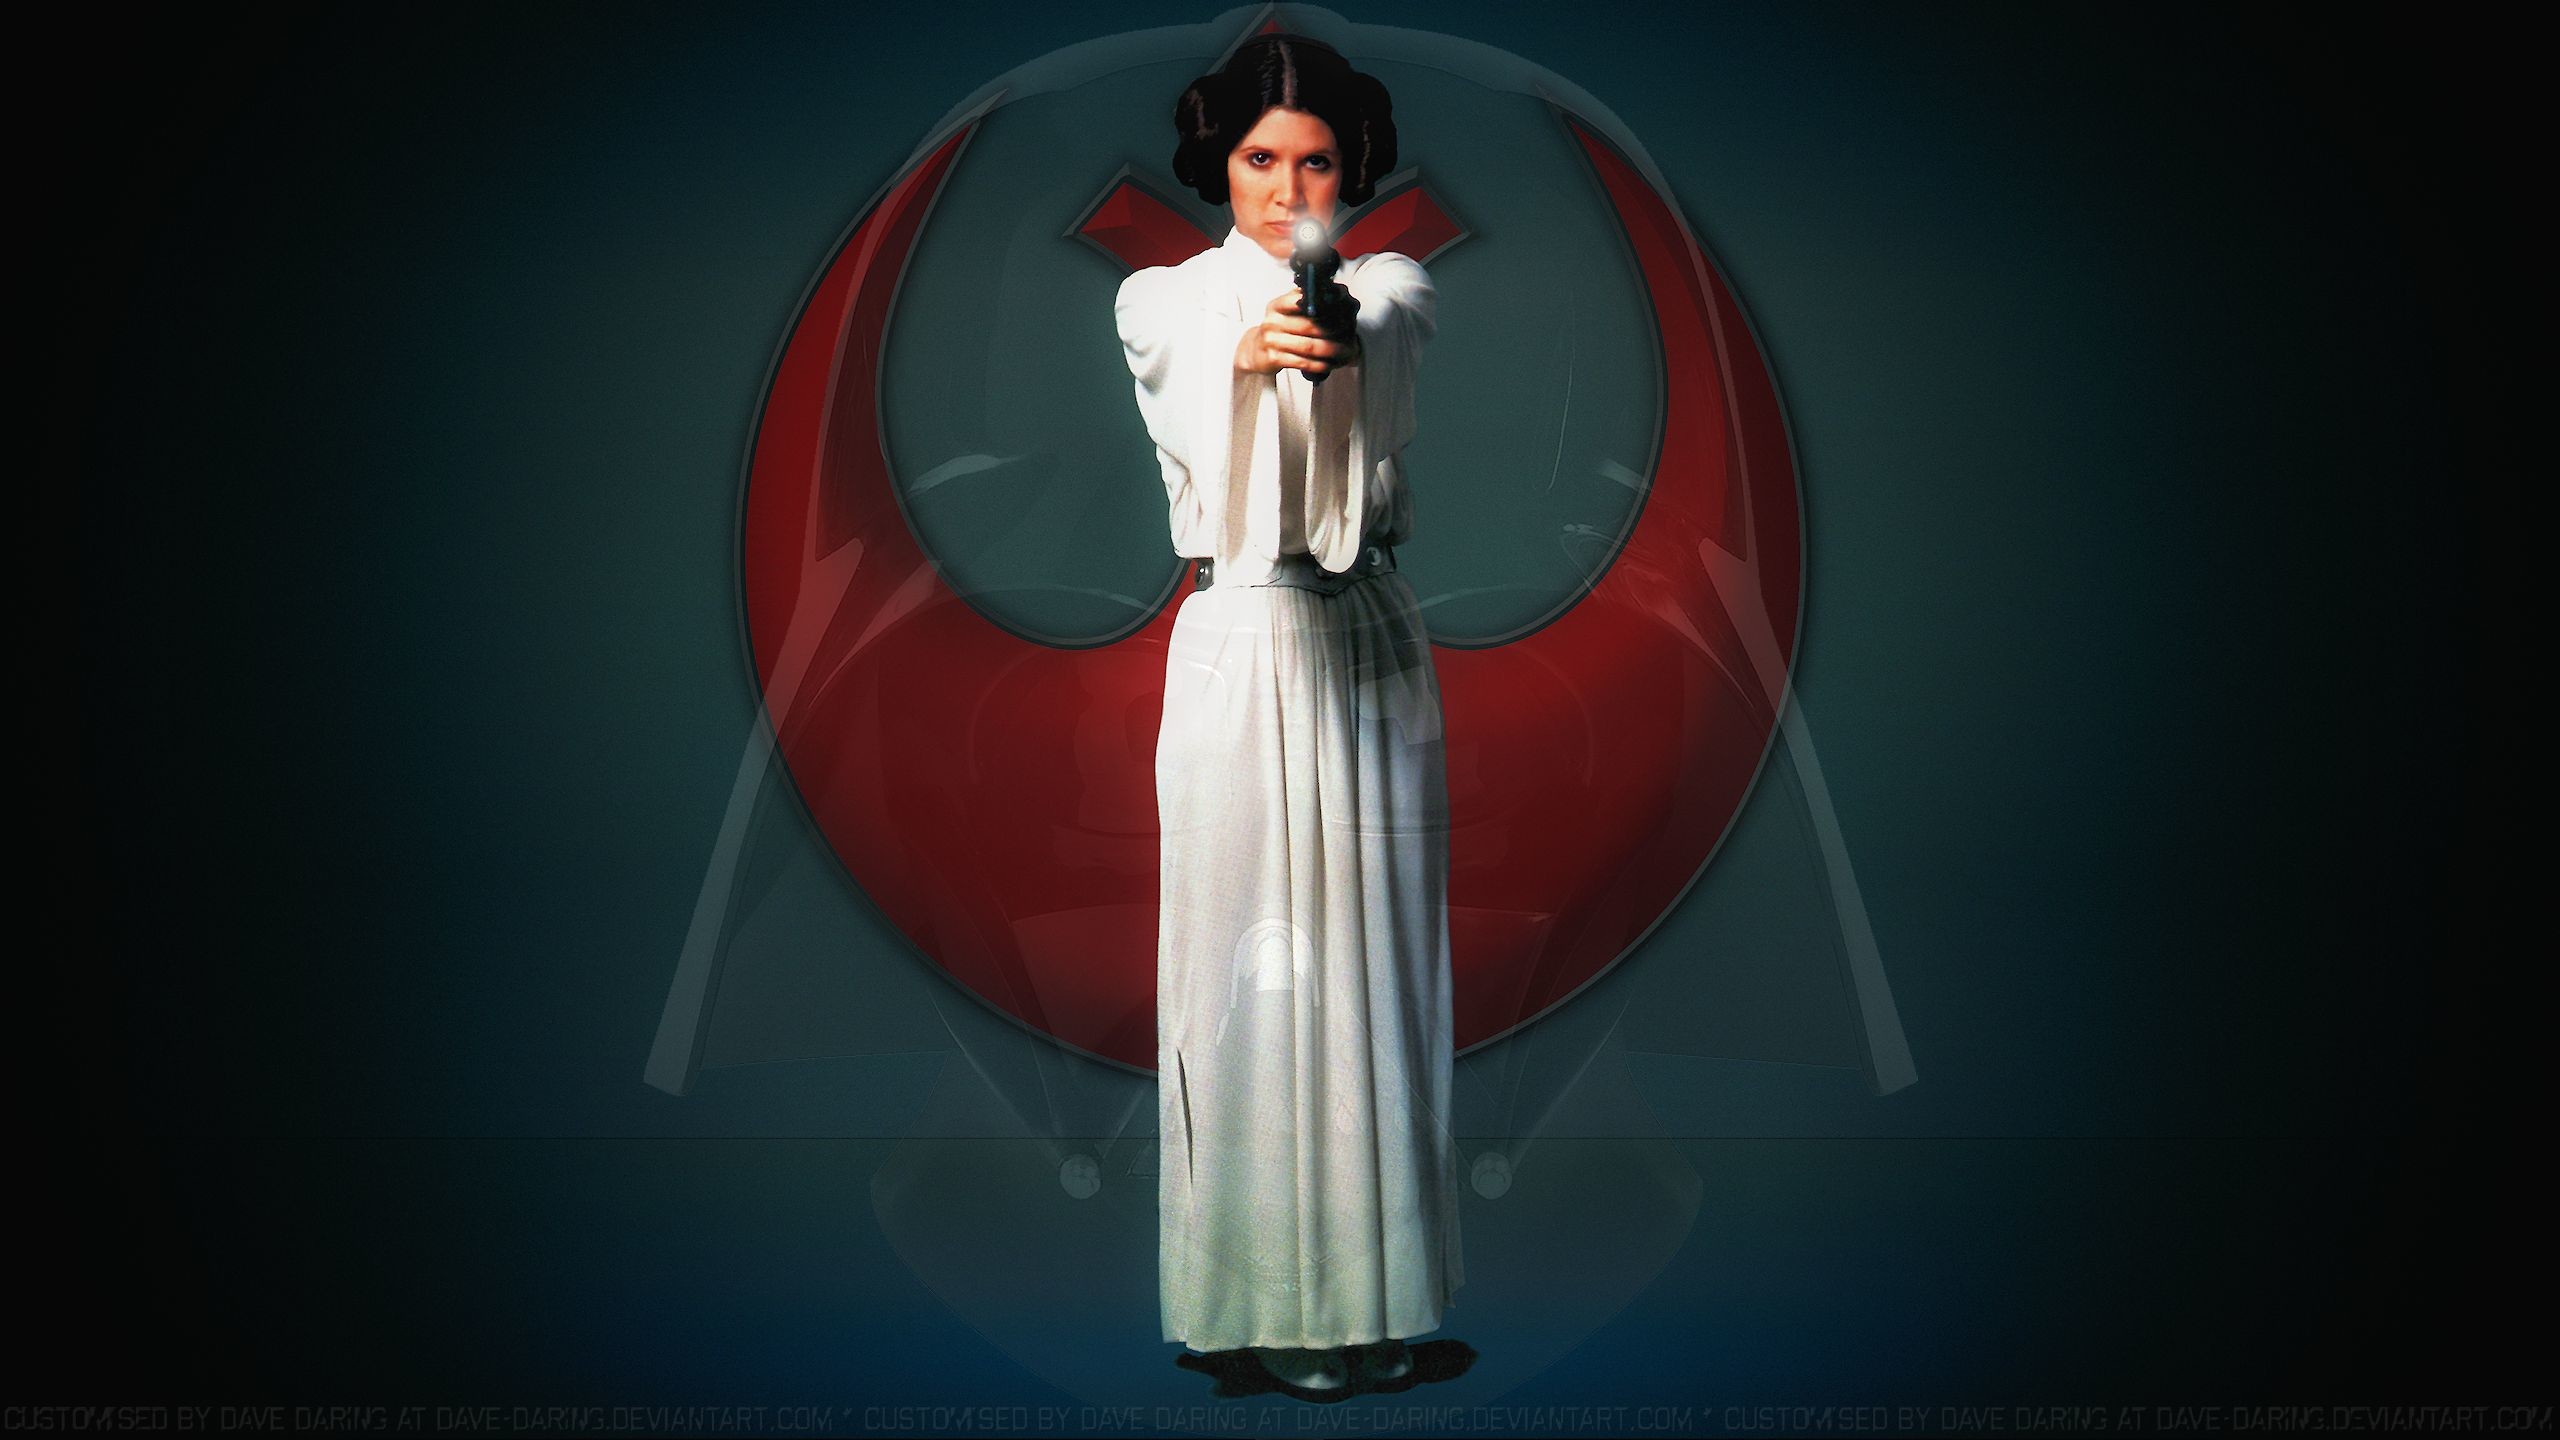 2560x1440 Princess Leia Wallpaper 